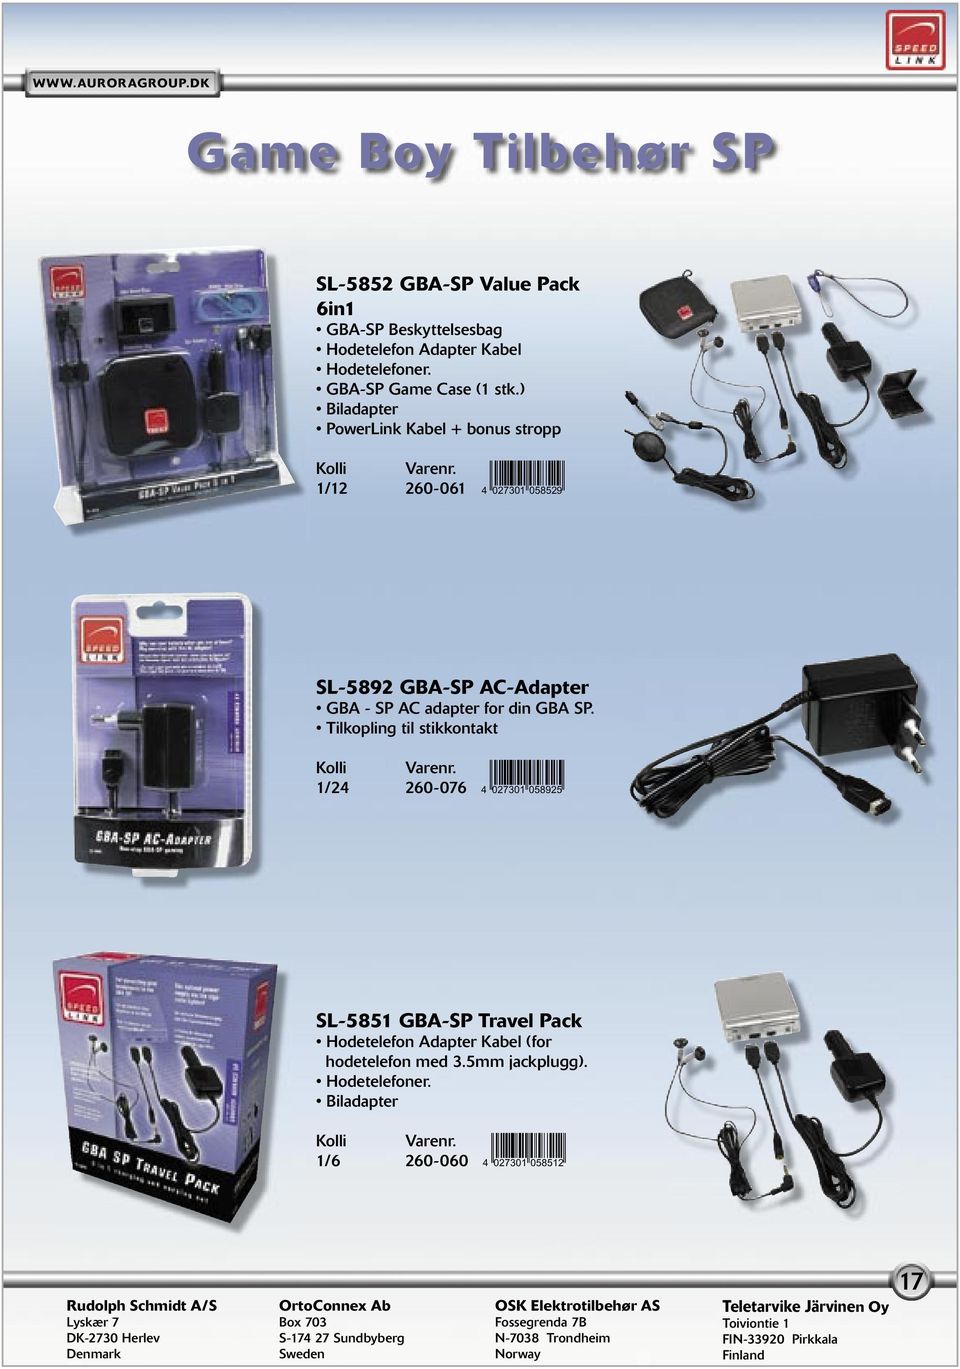 ) Biladapter PowerLink Kabel + bonus stropp 1/12 260-061 4<ANHDLM=afifcj> SL-5892 GBA-SP AC-Adapter GBA - SP AC adapter